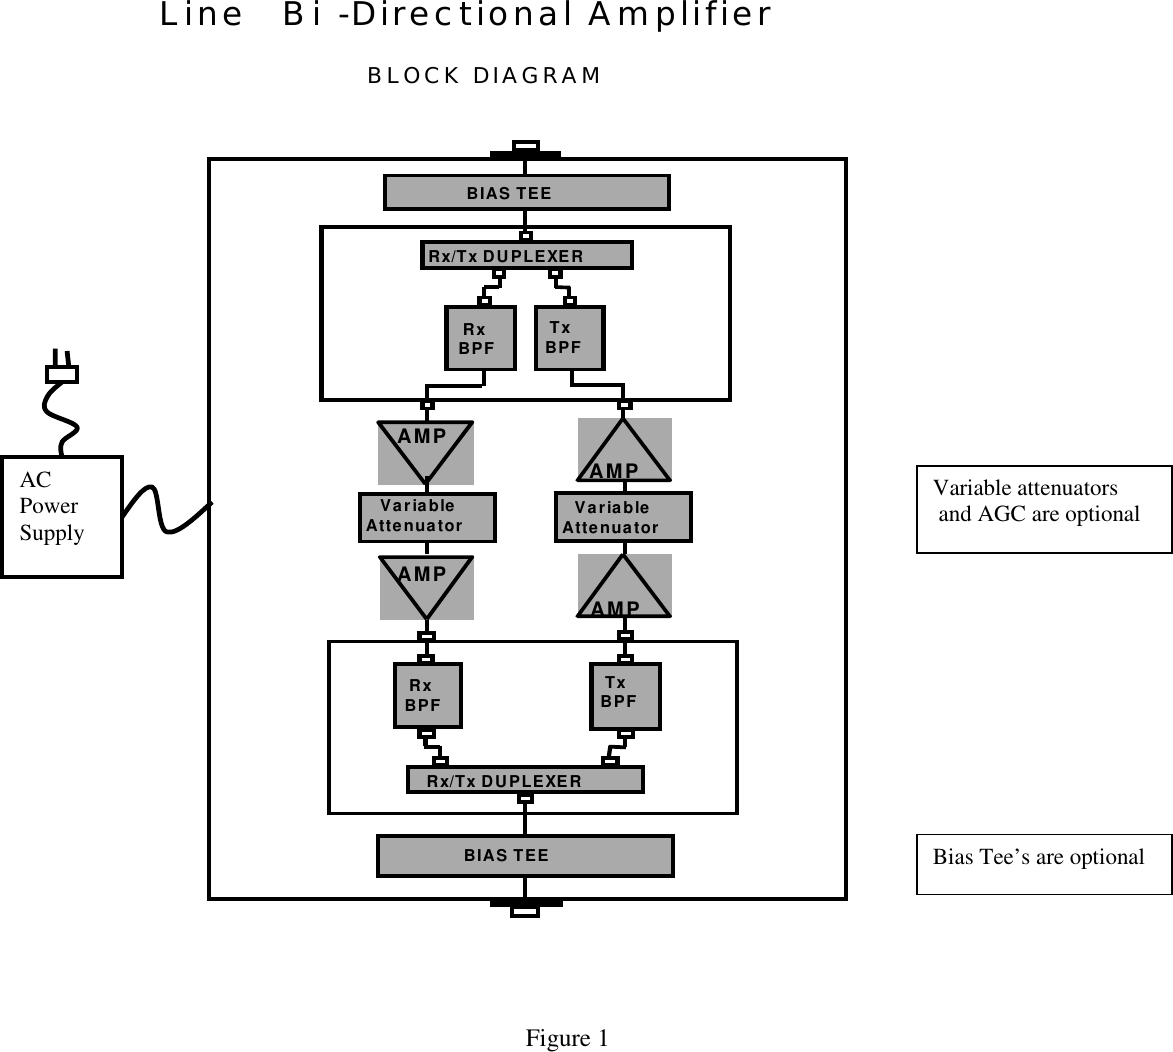                                                           Figure 1Line  Bi -Directional AmplifierBLOCK DIAGRAMRx/Tx DUPLEXER RxBPF TxBPFRx/Tx DUPLEXERBIAS TEE  Rx BPFTxBPFBIAS TEEAMPAMPVariableAttenuatorAMPAMPVariableAttenuatorVariable attenuators and AGC are optionalACPowerSupplyBias Tee’s are optional